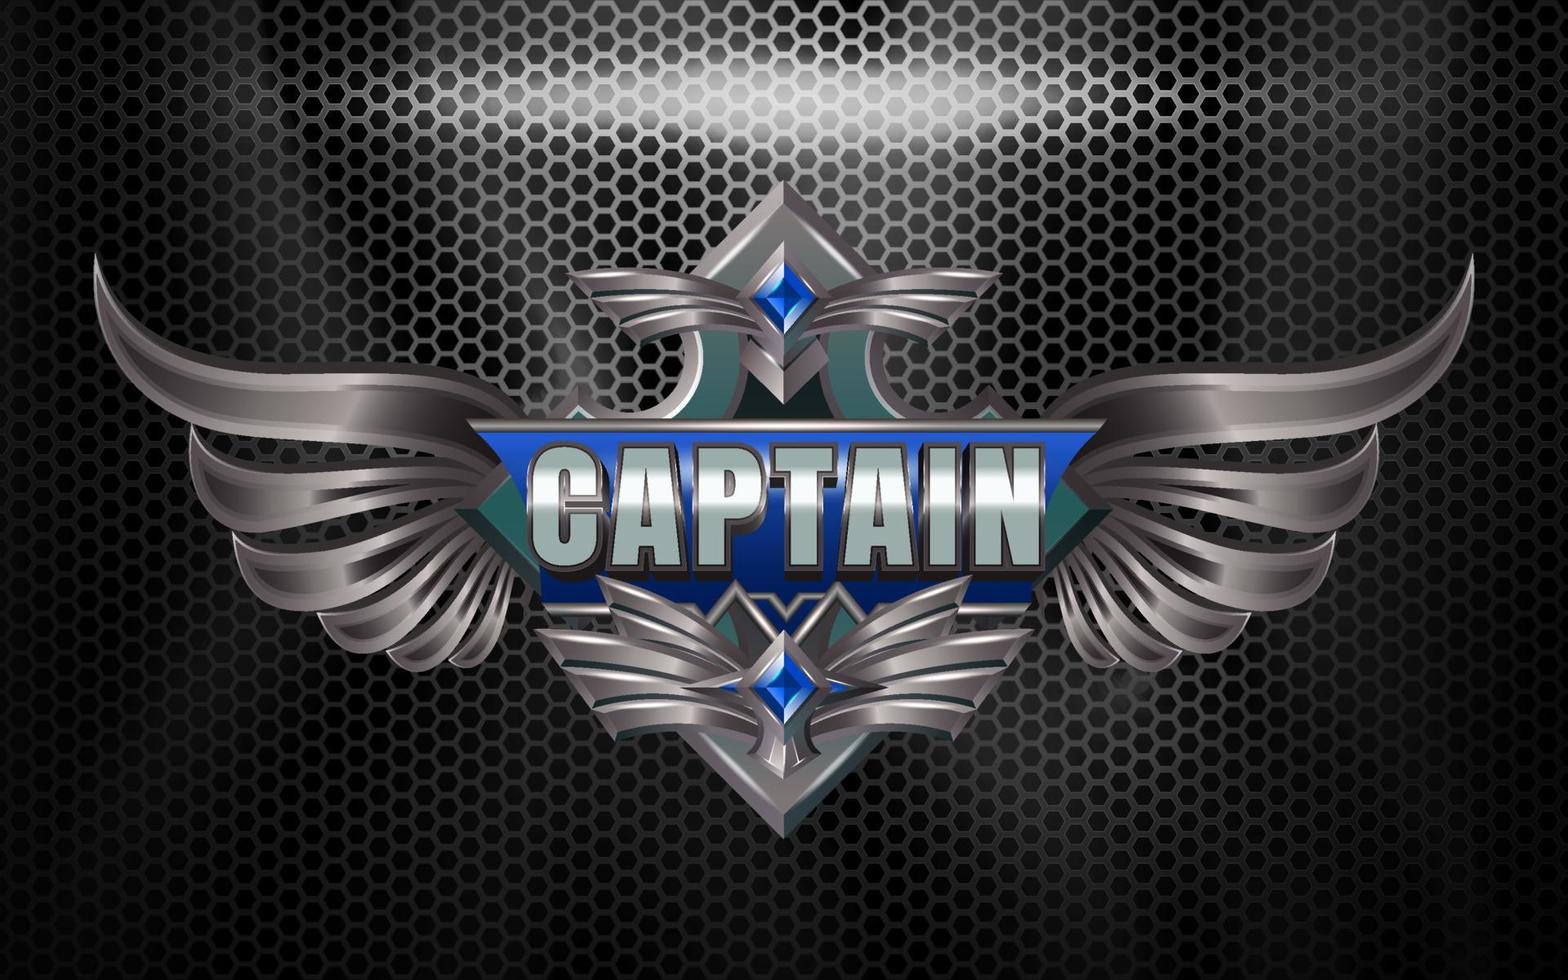 Captain Esport Team Logo 3d Text Effect with Winged Emblem vector